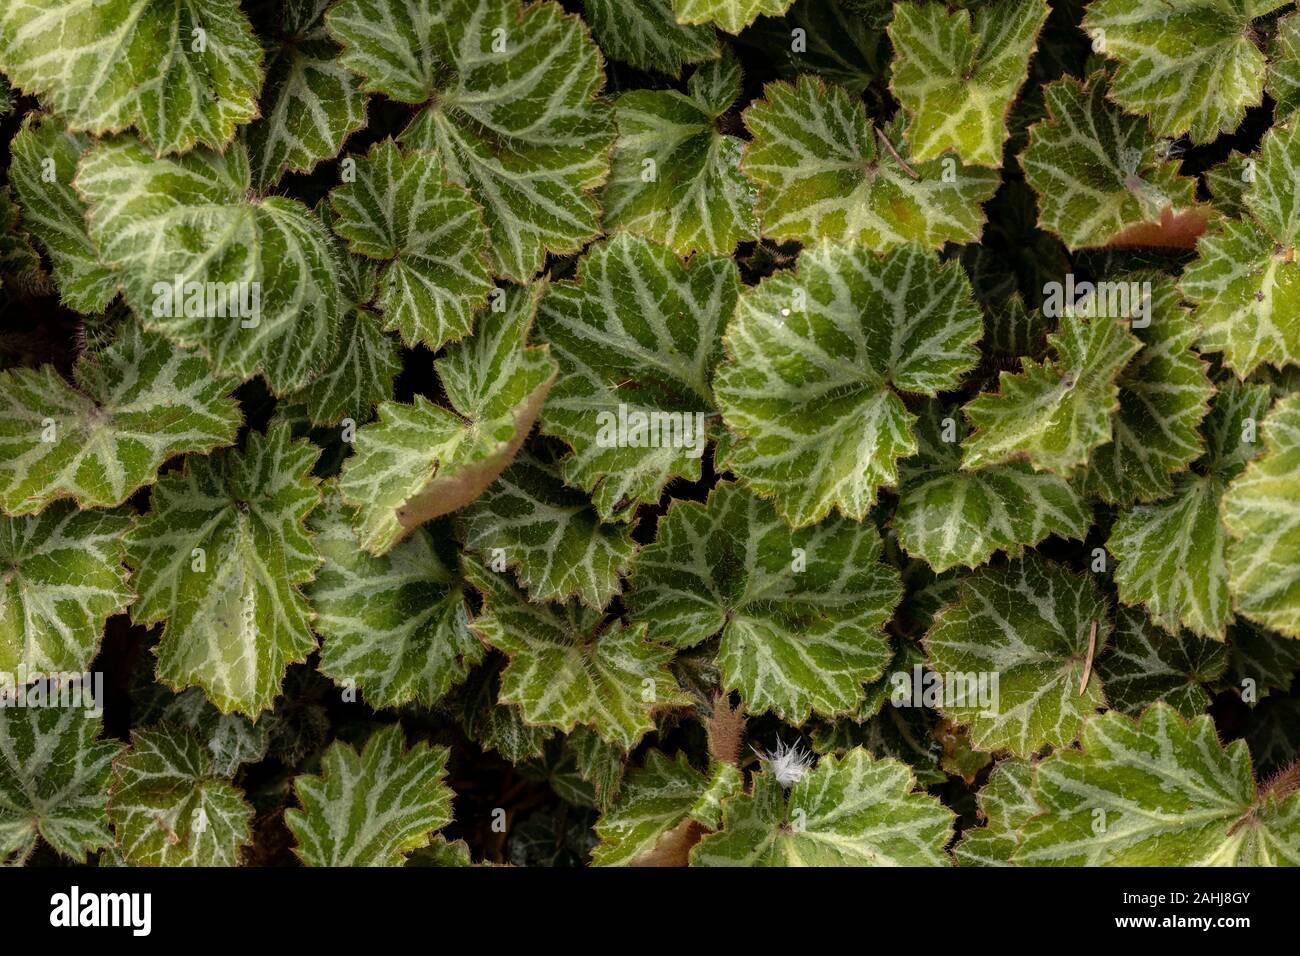 Leaves of Creeping saxifrage, Saxifraga sarmentosa; garden plant, from China. Stock Photo